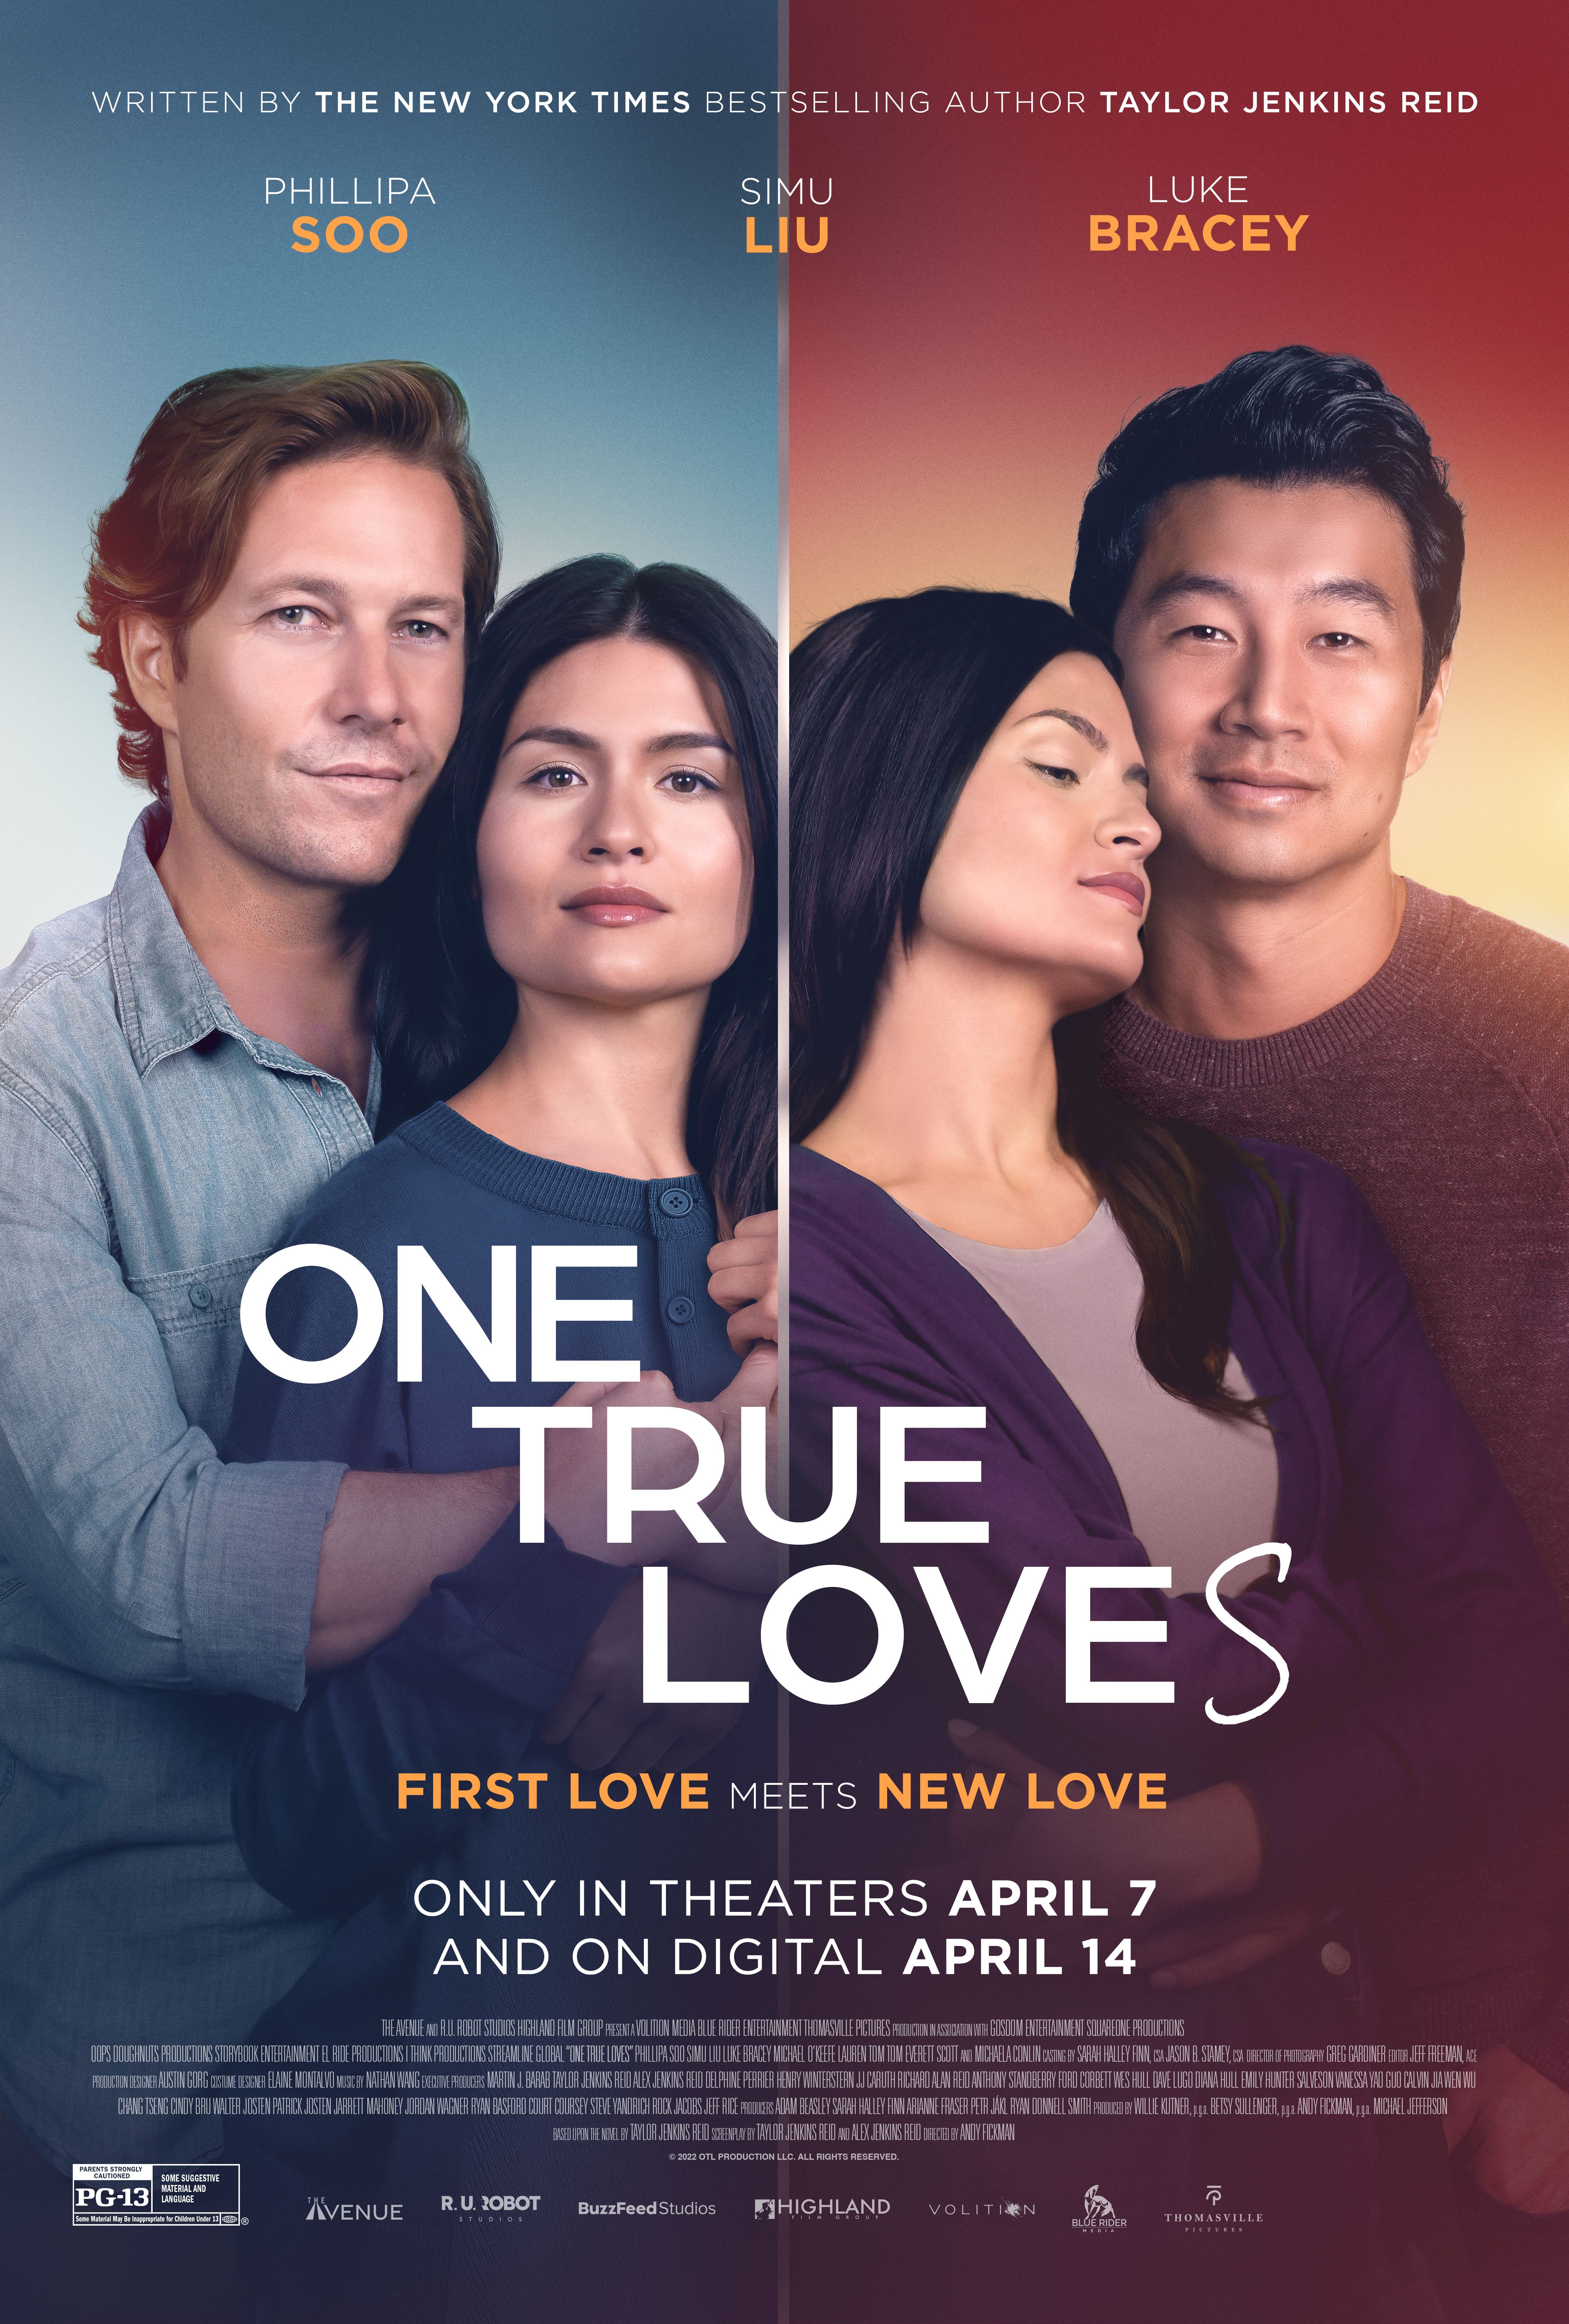 Phillipa Soo, Luke Bracey and Simu Liu on the One True Loves Poster